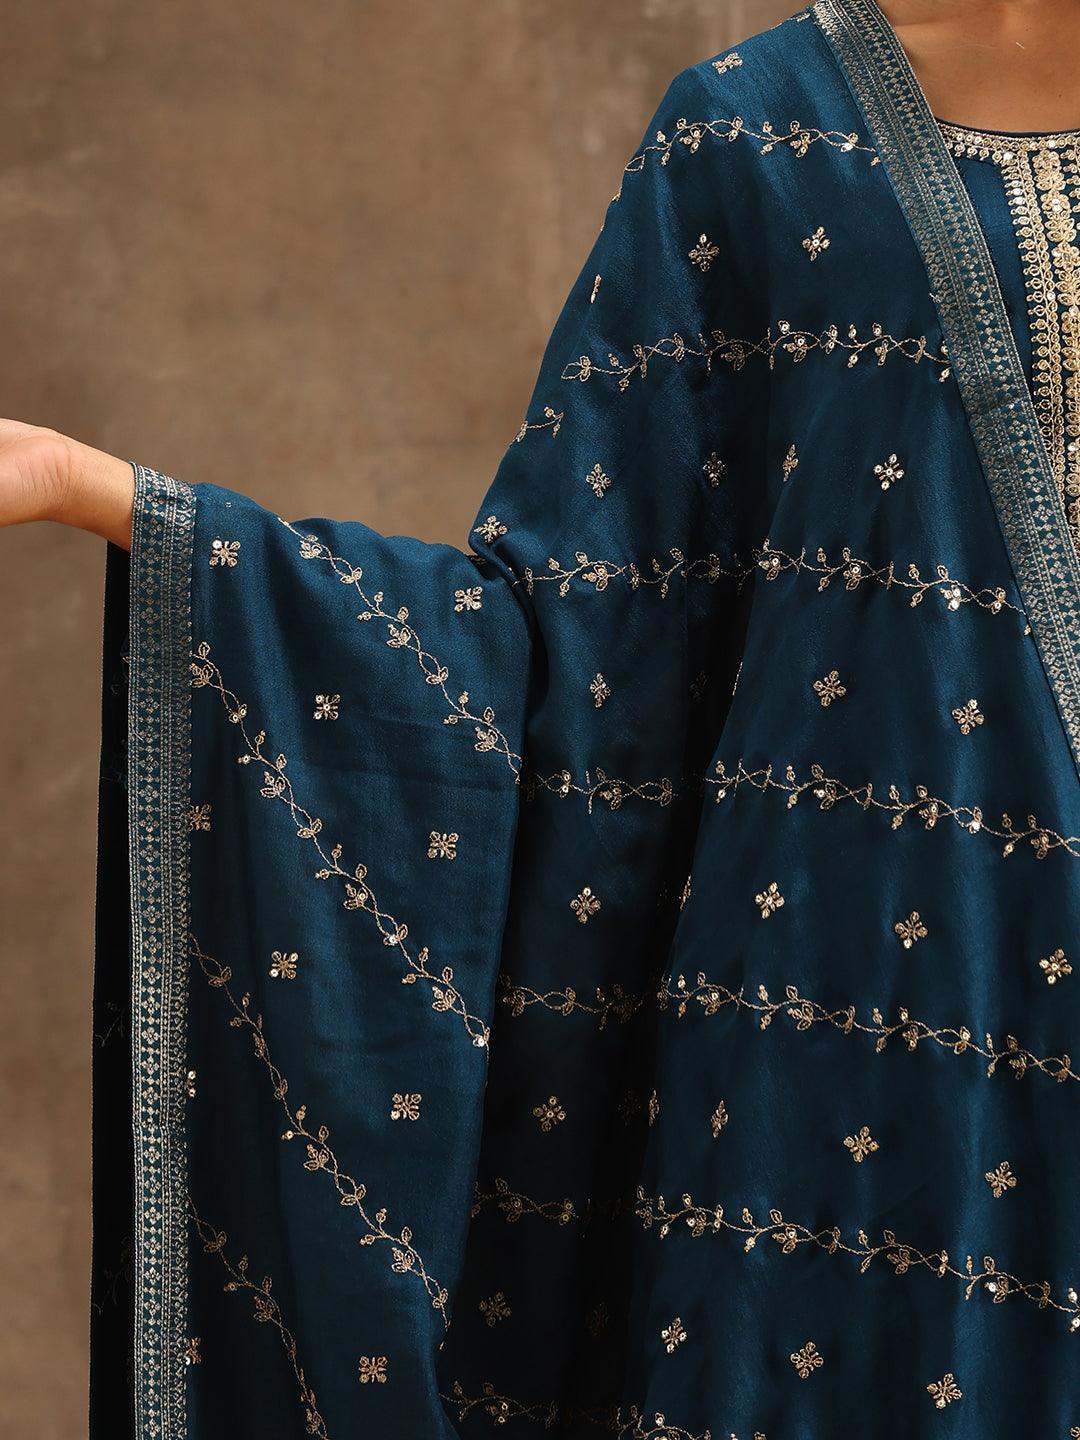 Teal Embroidered Silk Blend Pakistani Suit